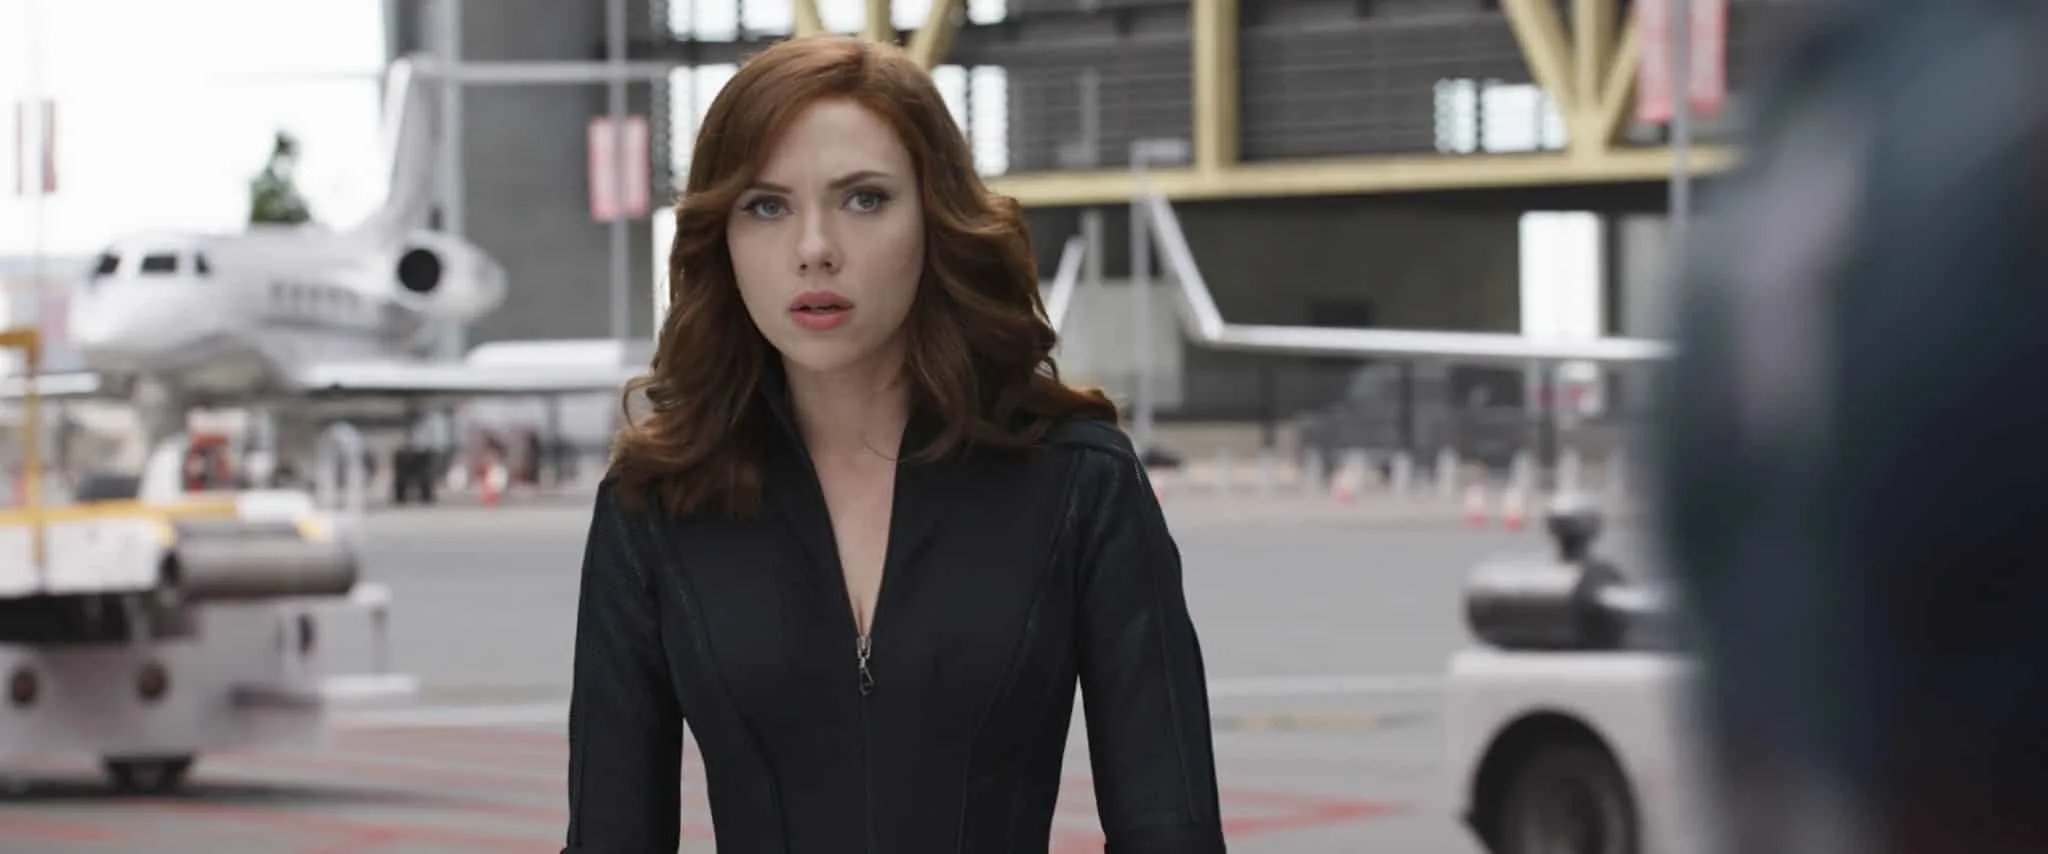 Marvel's Captain America: Civil War Black Widow/Natasha Romanoff (Scarlett Johansson) Photo Credit: Film Frame © Marvel 2016